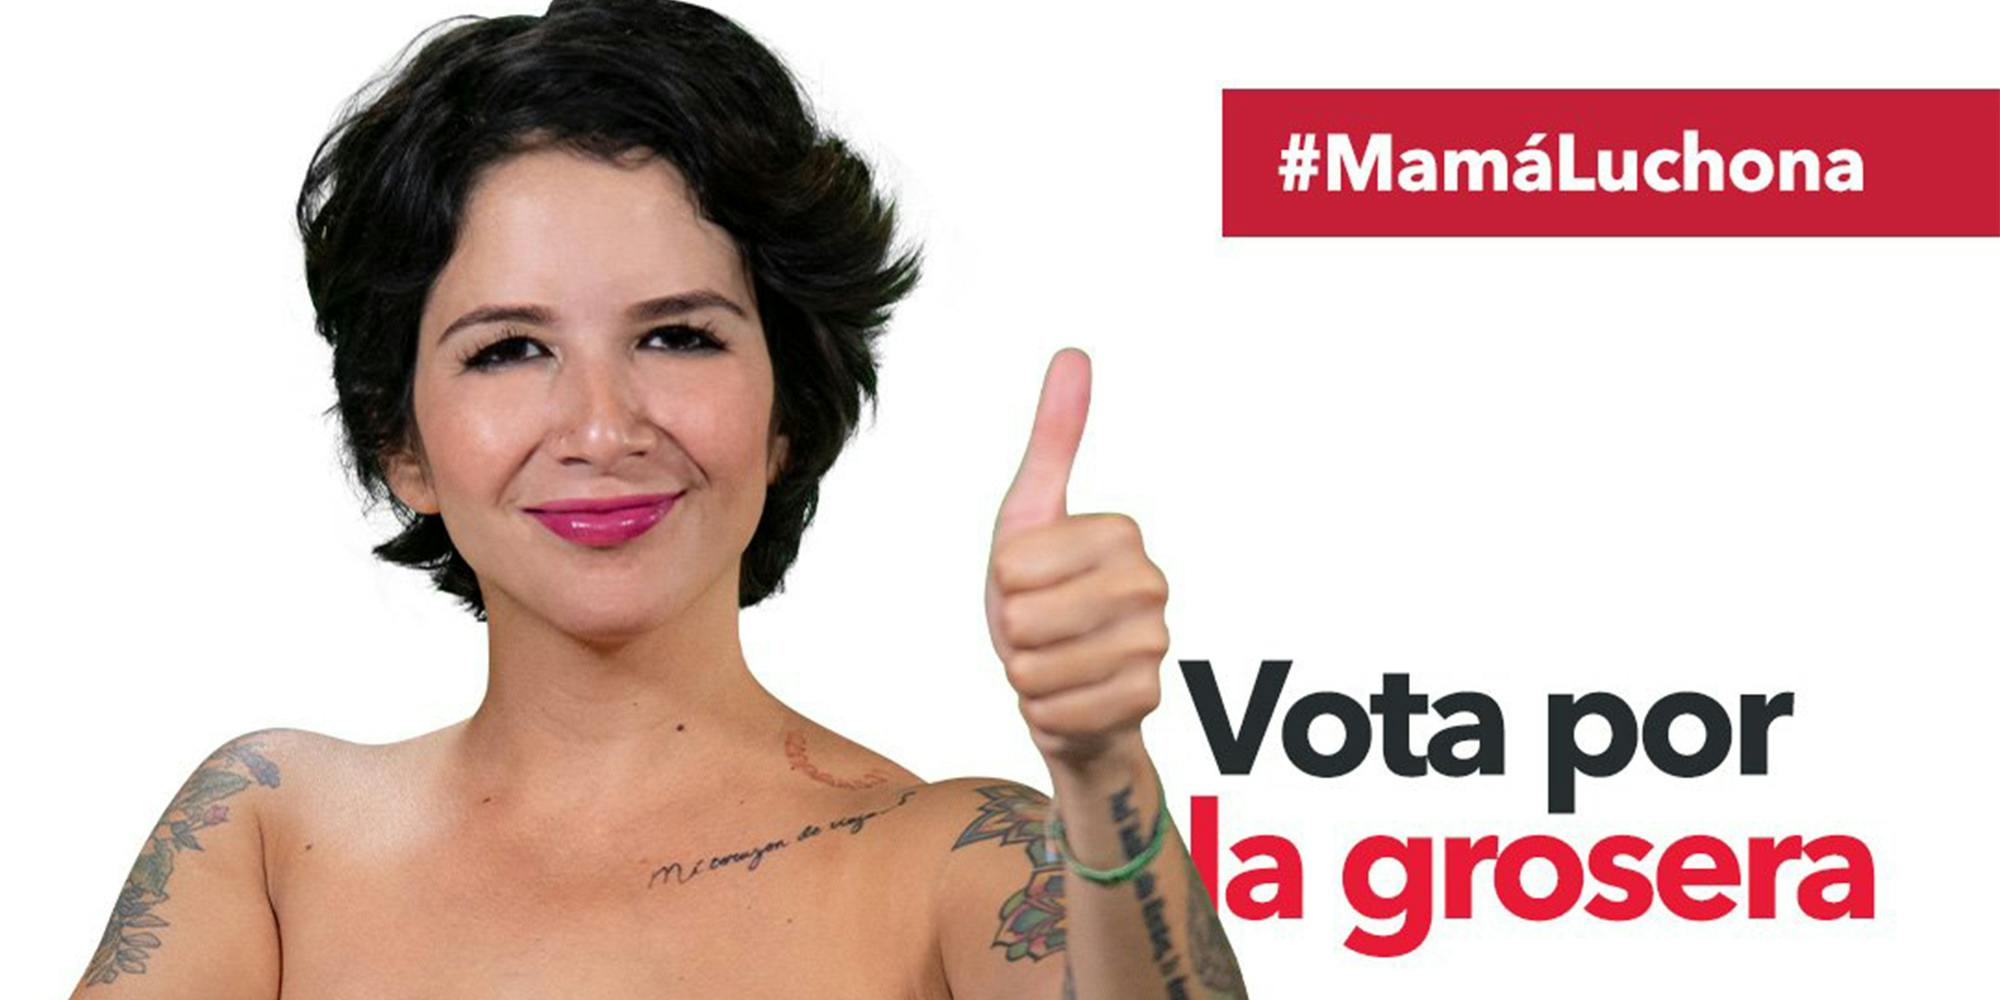 Woman with thumbs up and caption #MamaLuchona "Vota por la grosera"